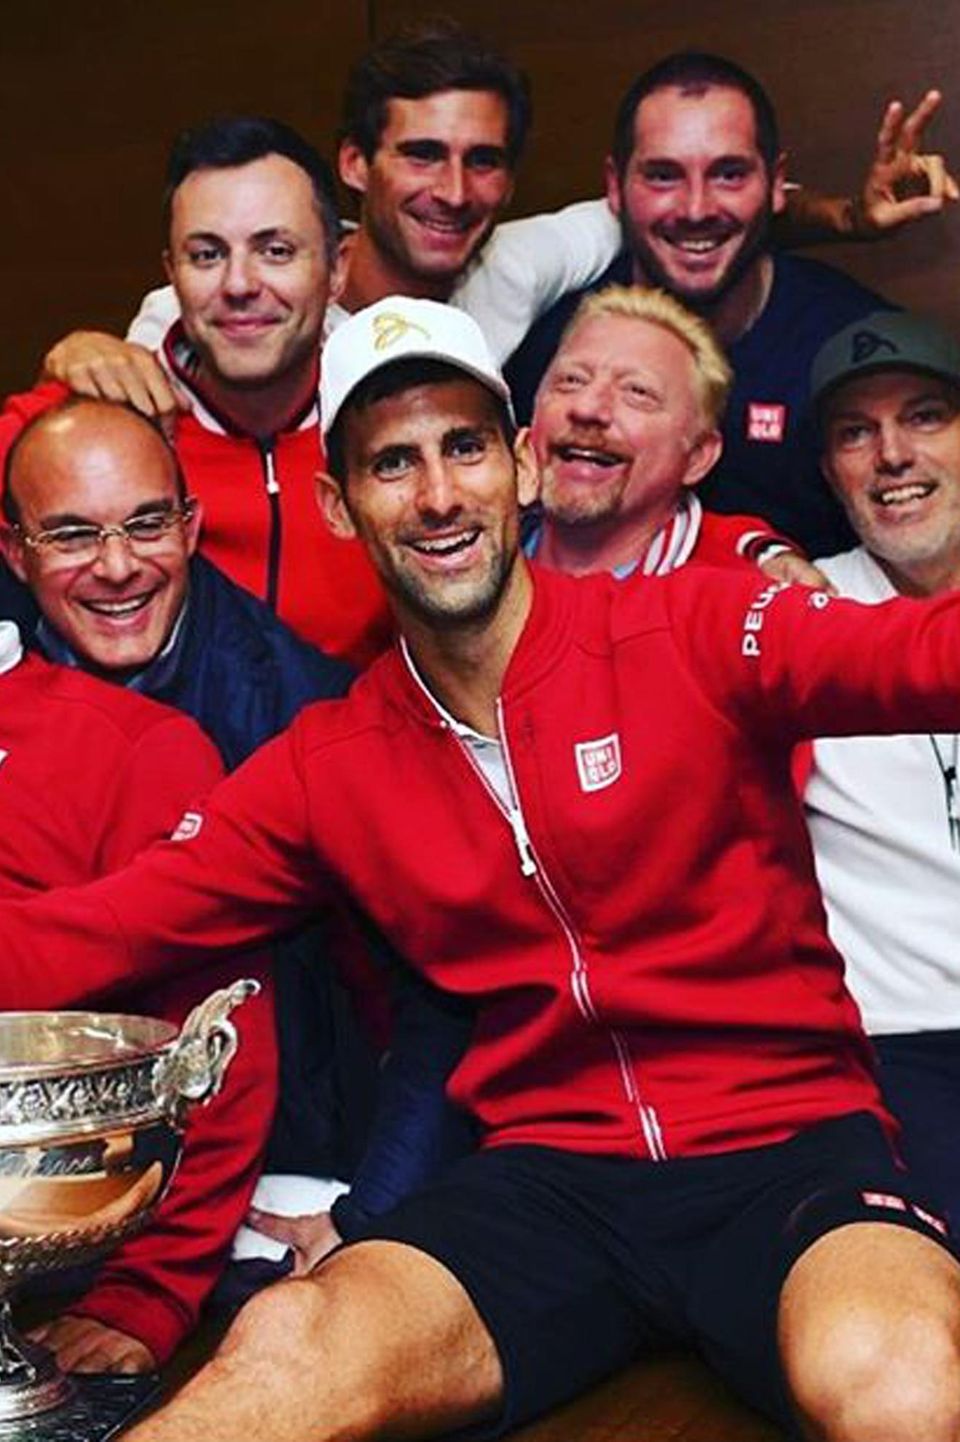 Juni 2016  Stolzer Trainer: Boris Becker freut sich über den French-Open-Sieg seines Schützlings Novak Djokovic.